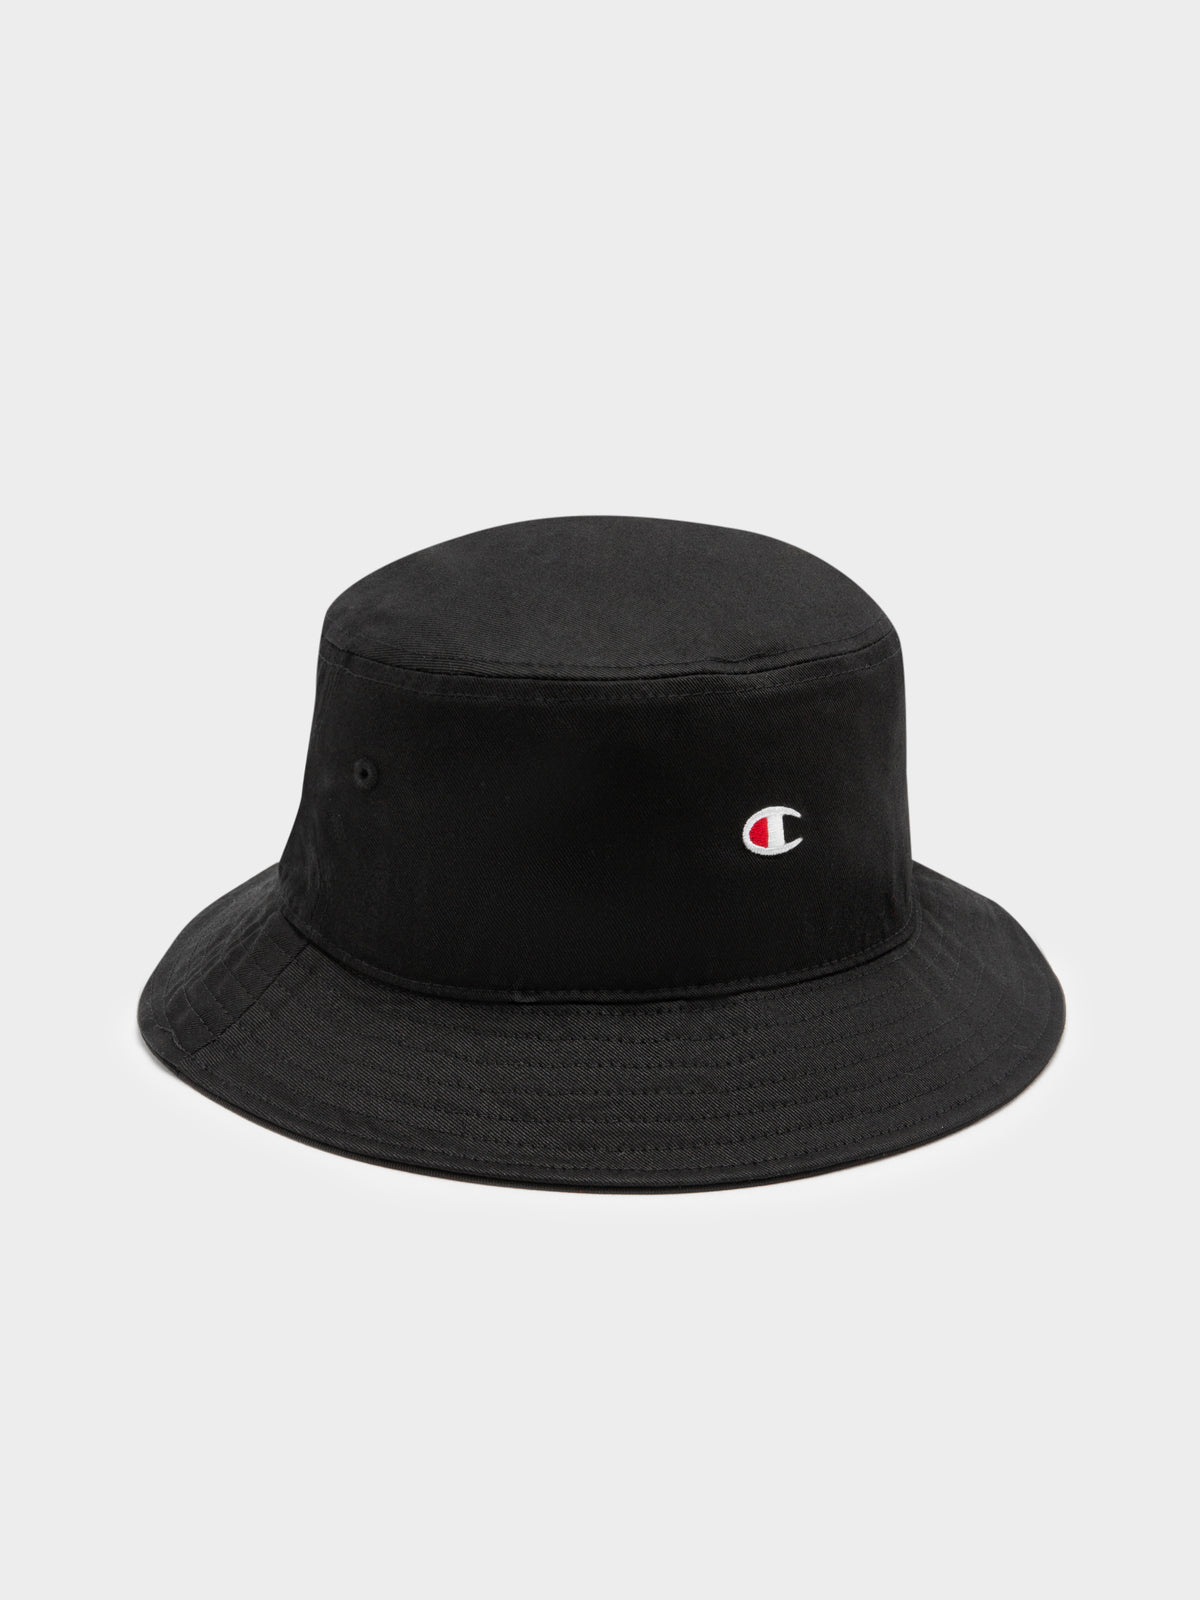 C Bucket Hat in Black